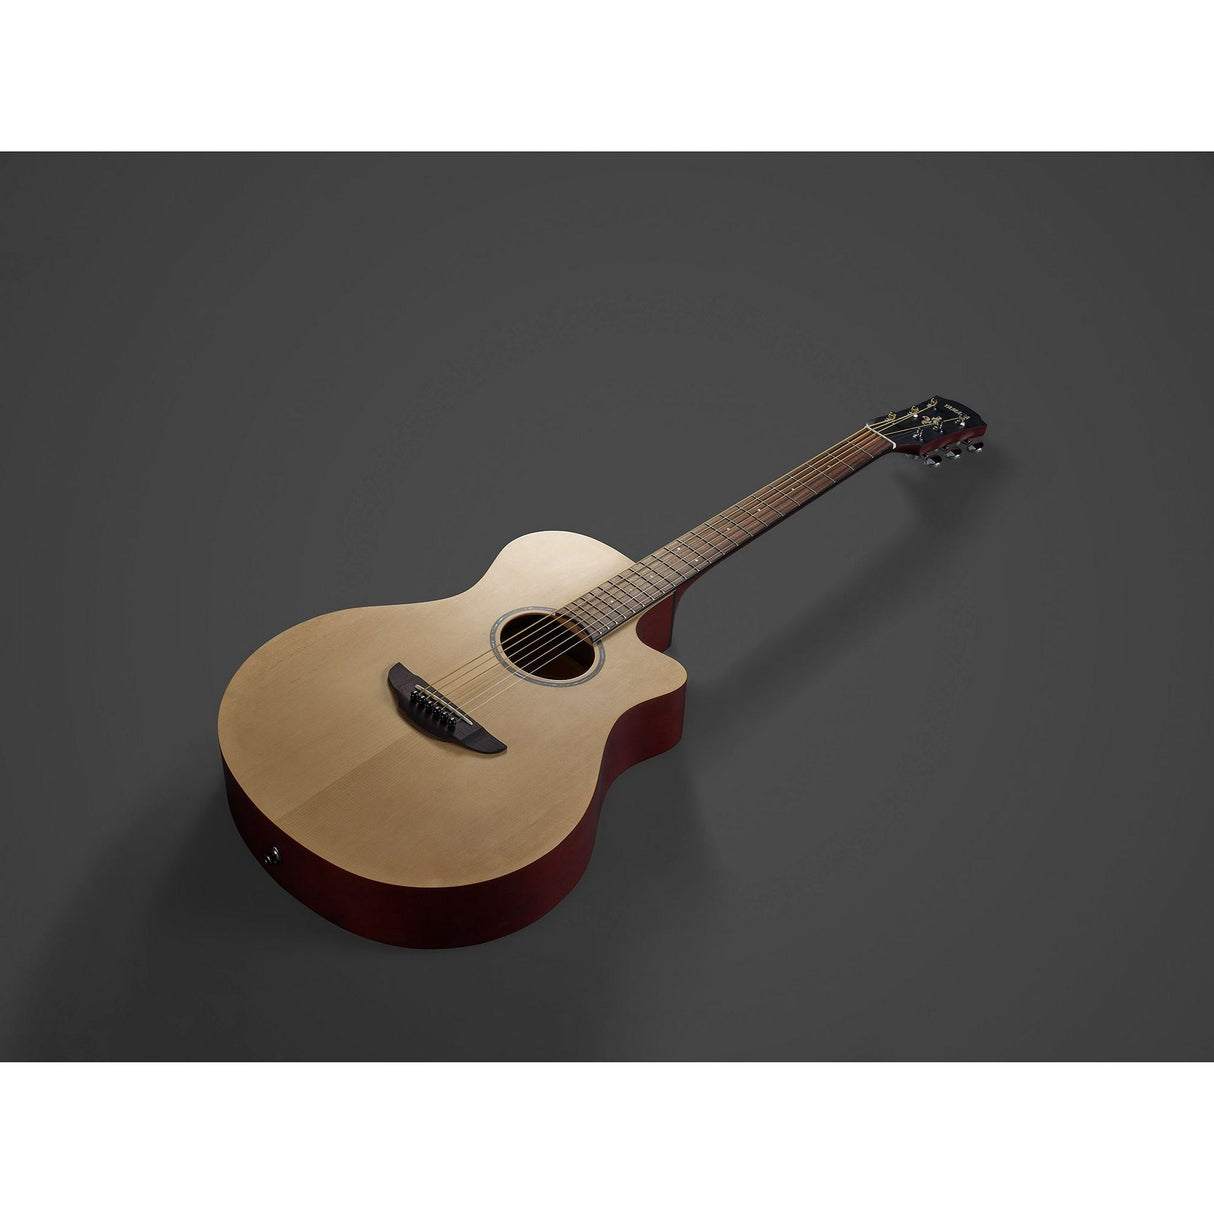 Yamaha APX600M Thinline Single Cutaway Acoustic/Electric Guitar